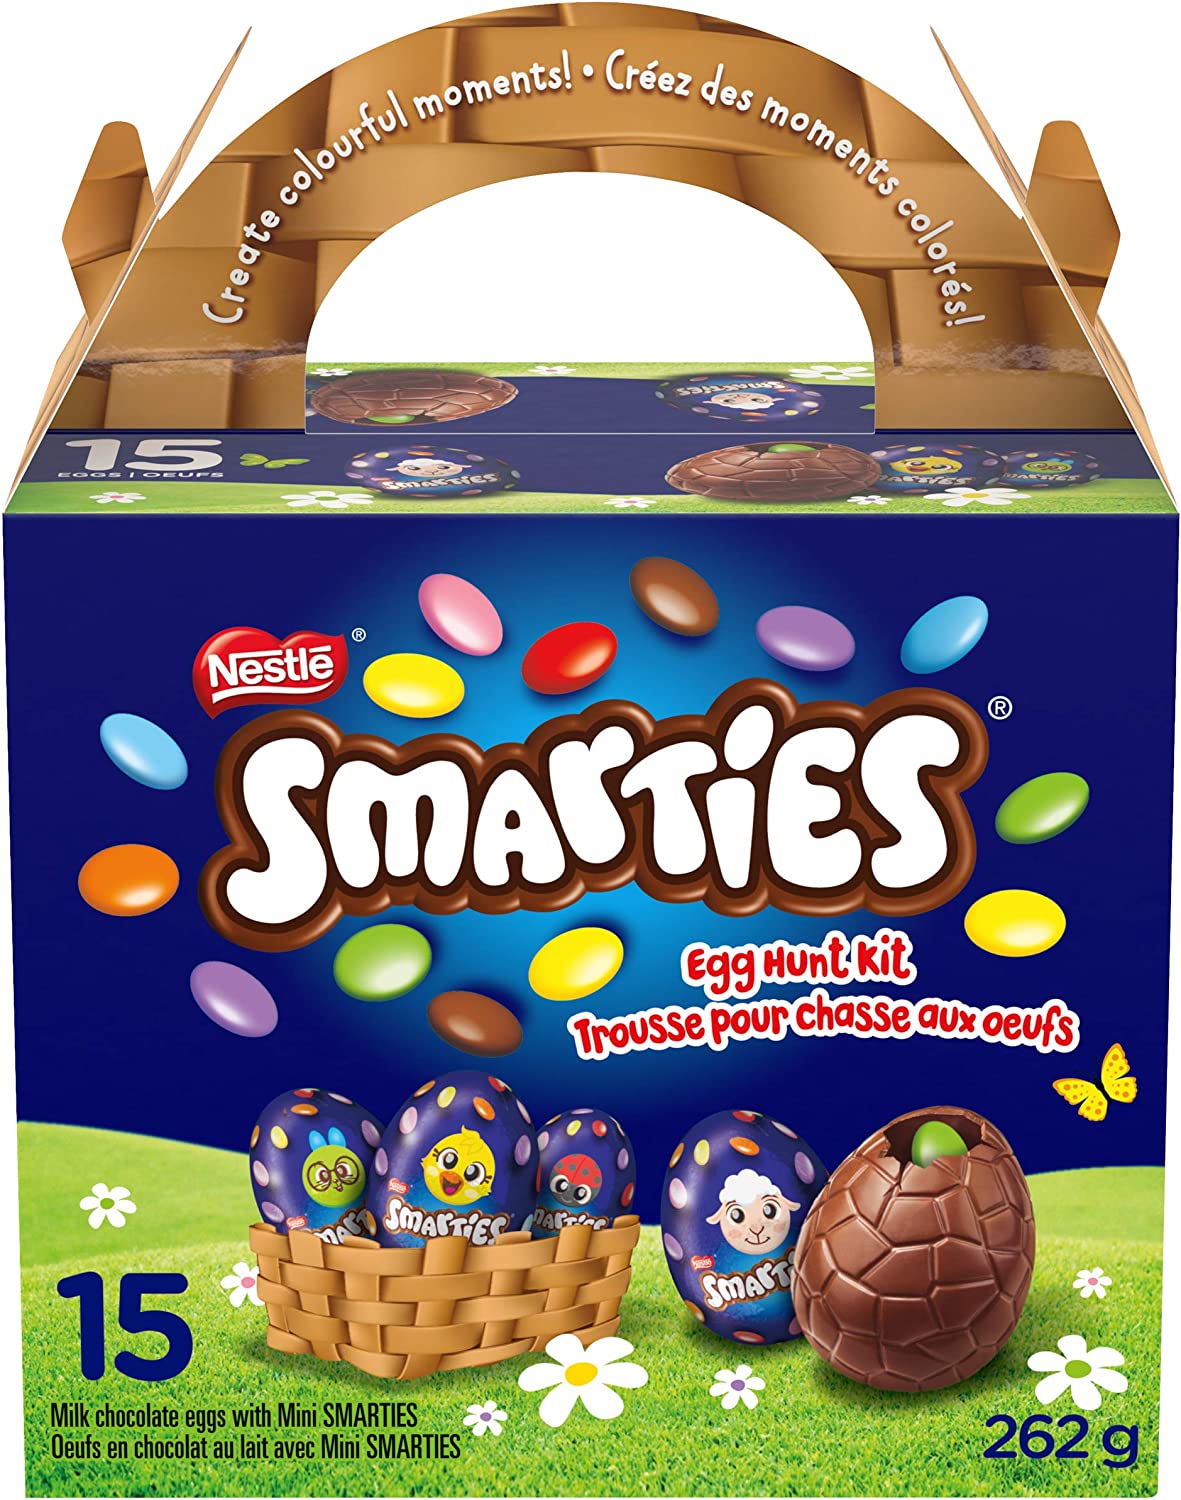 NESTLÉ Smarties Milk Chocolate Easter Egg Hunt Kit, 15 Count(Pack of 1), 262 Grams